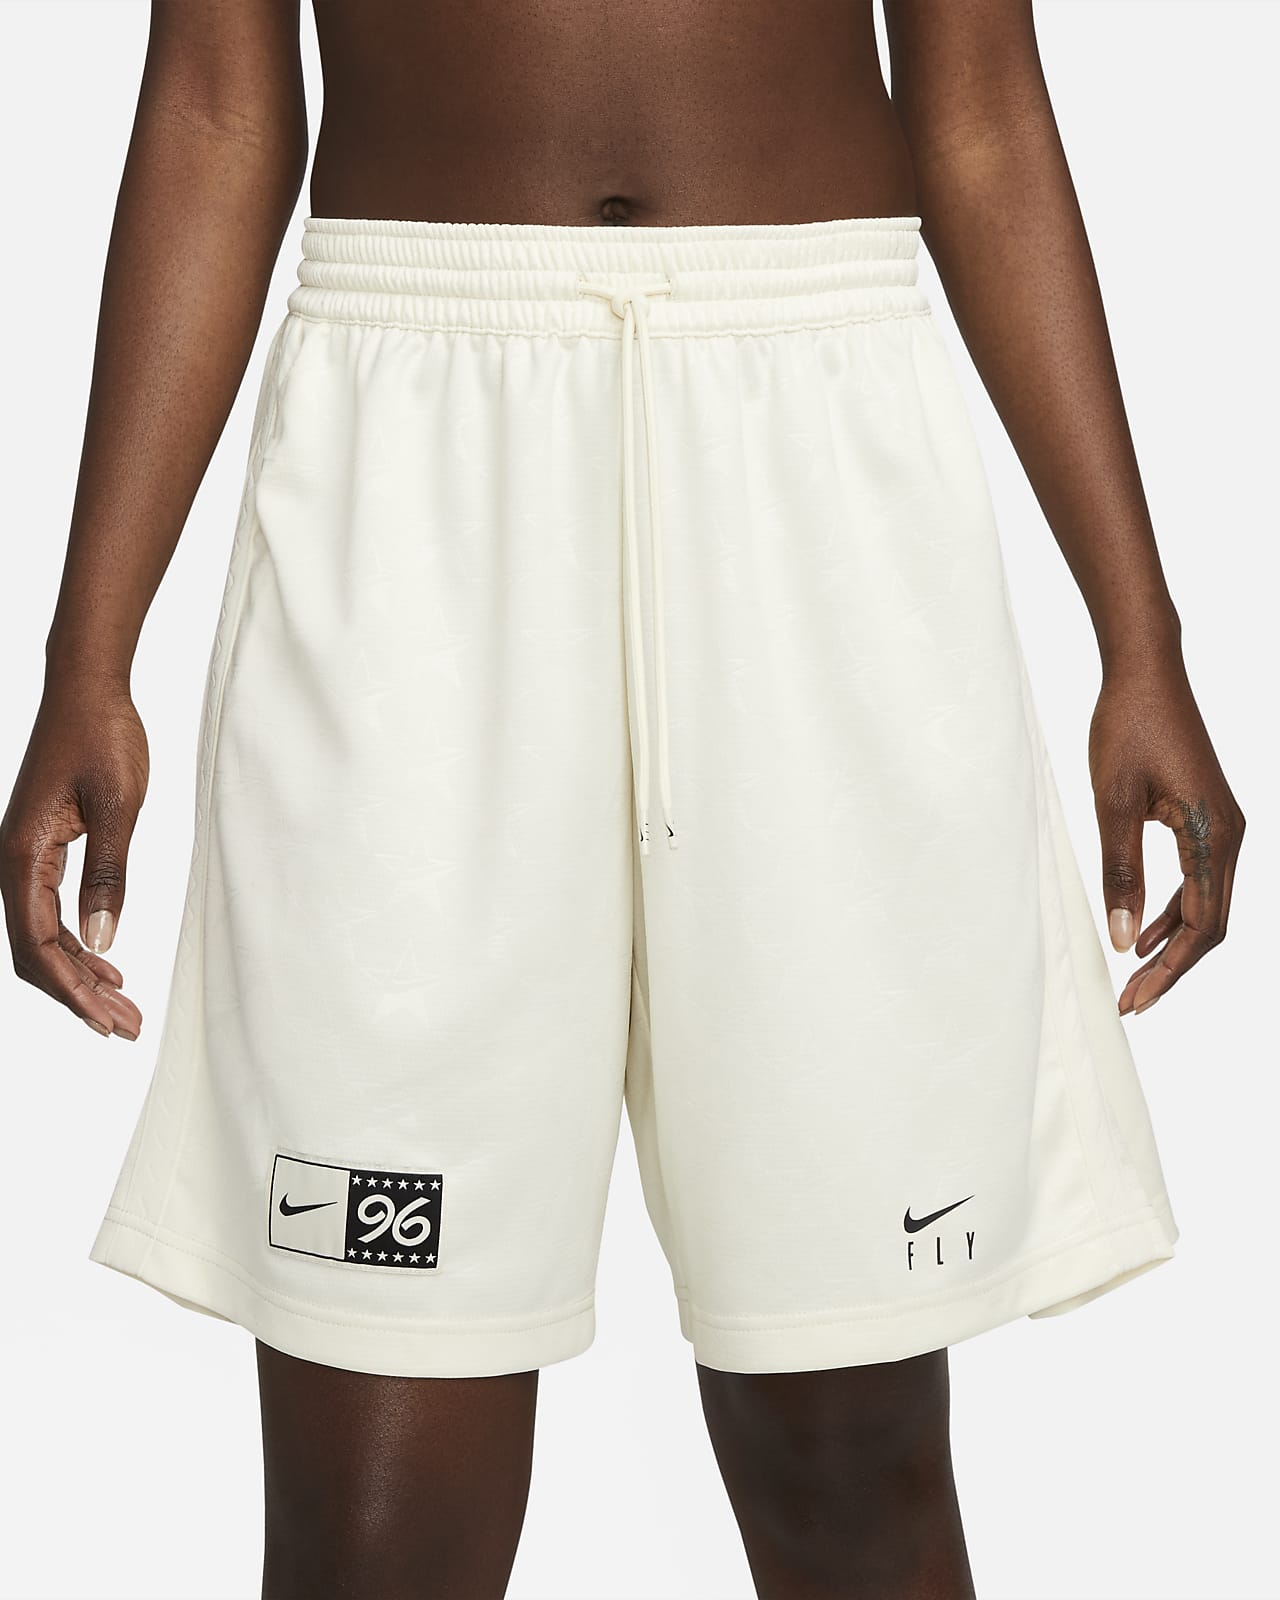 Shorts de básquetbol para mujer Nike. Nike MX